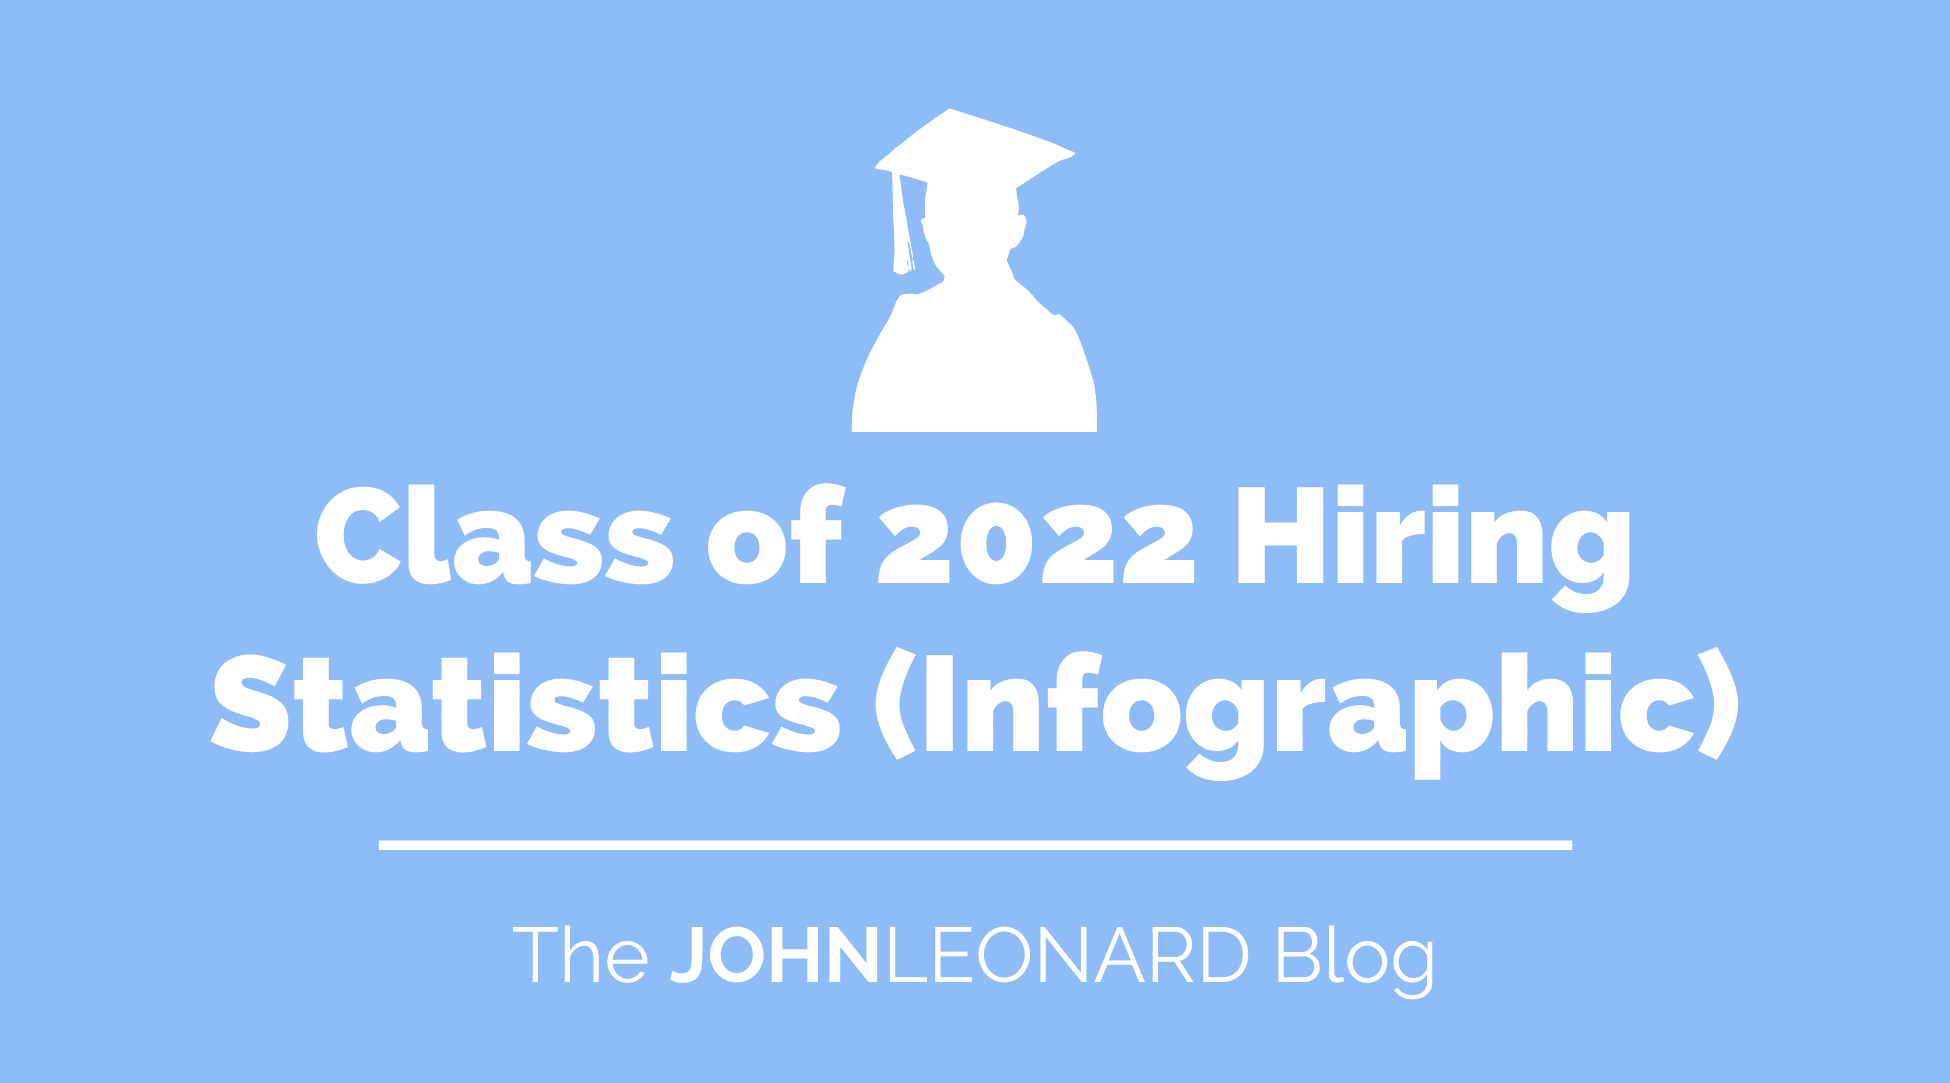 Class of 2022 Hiring Statistics (Infographic)